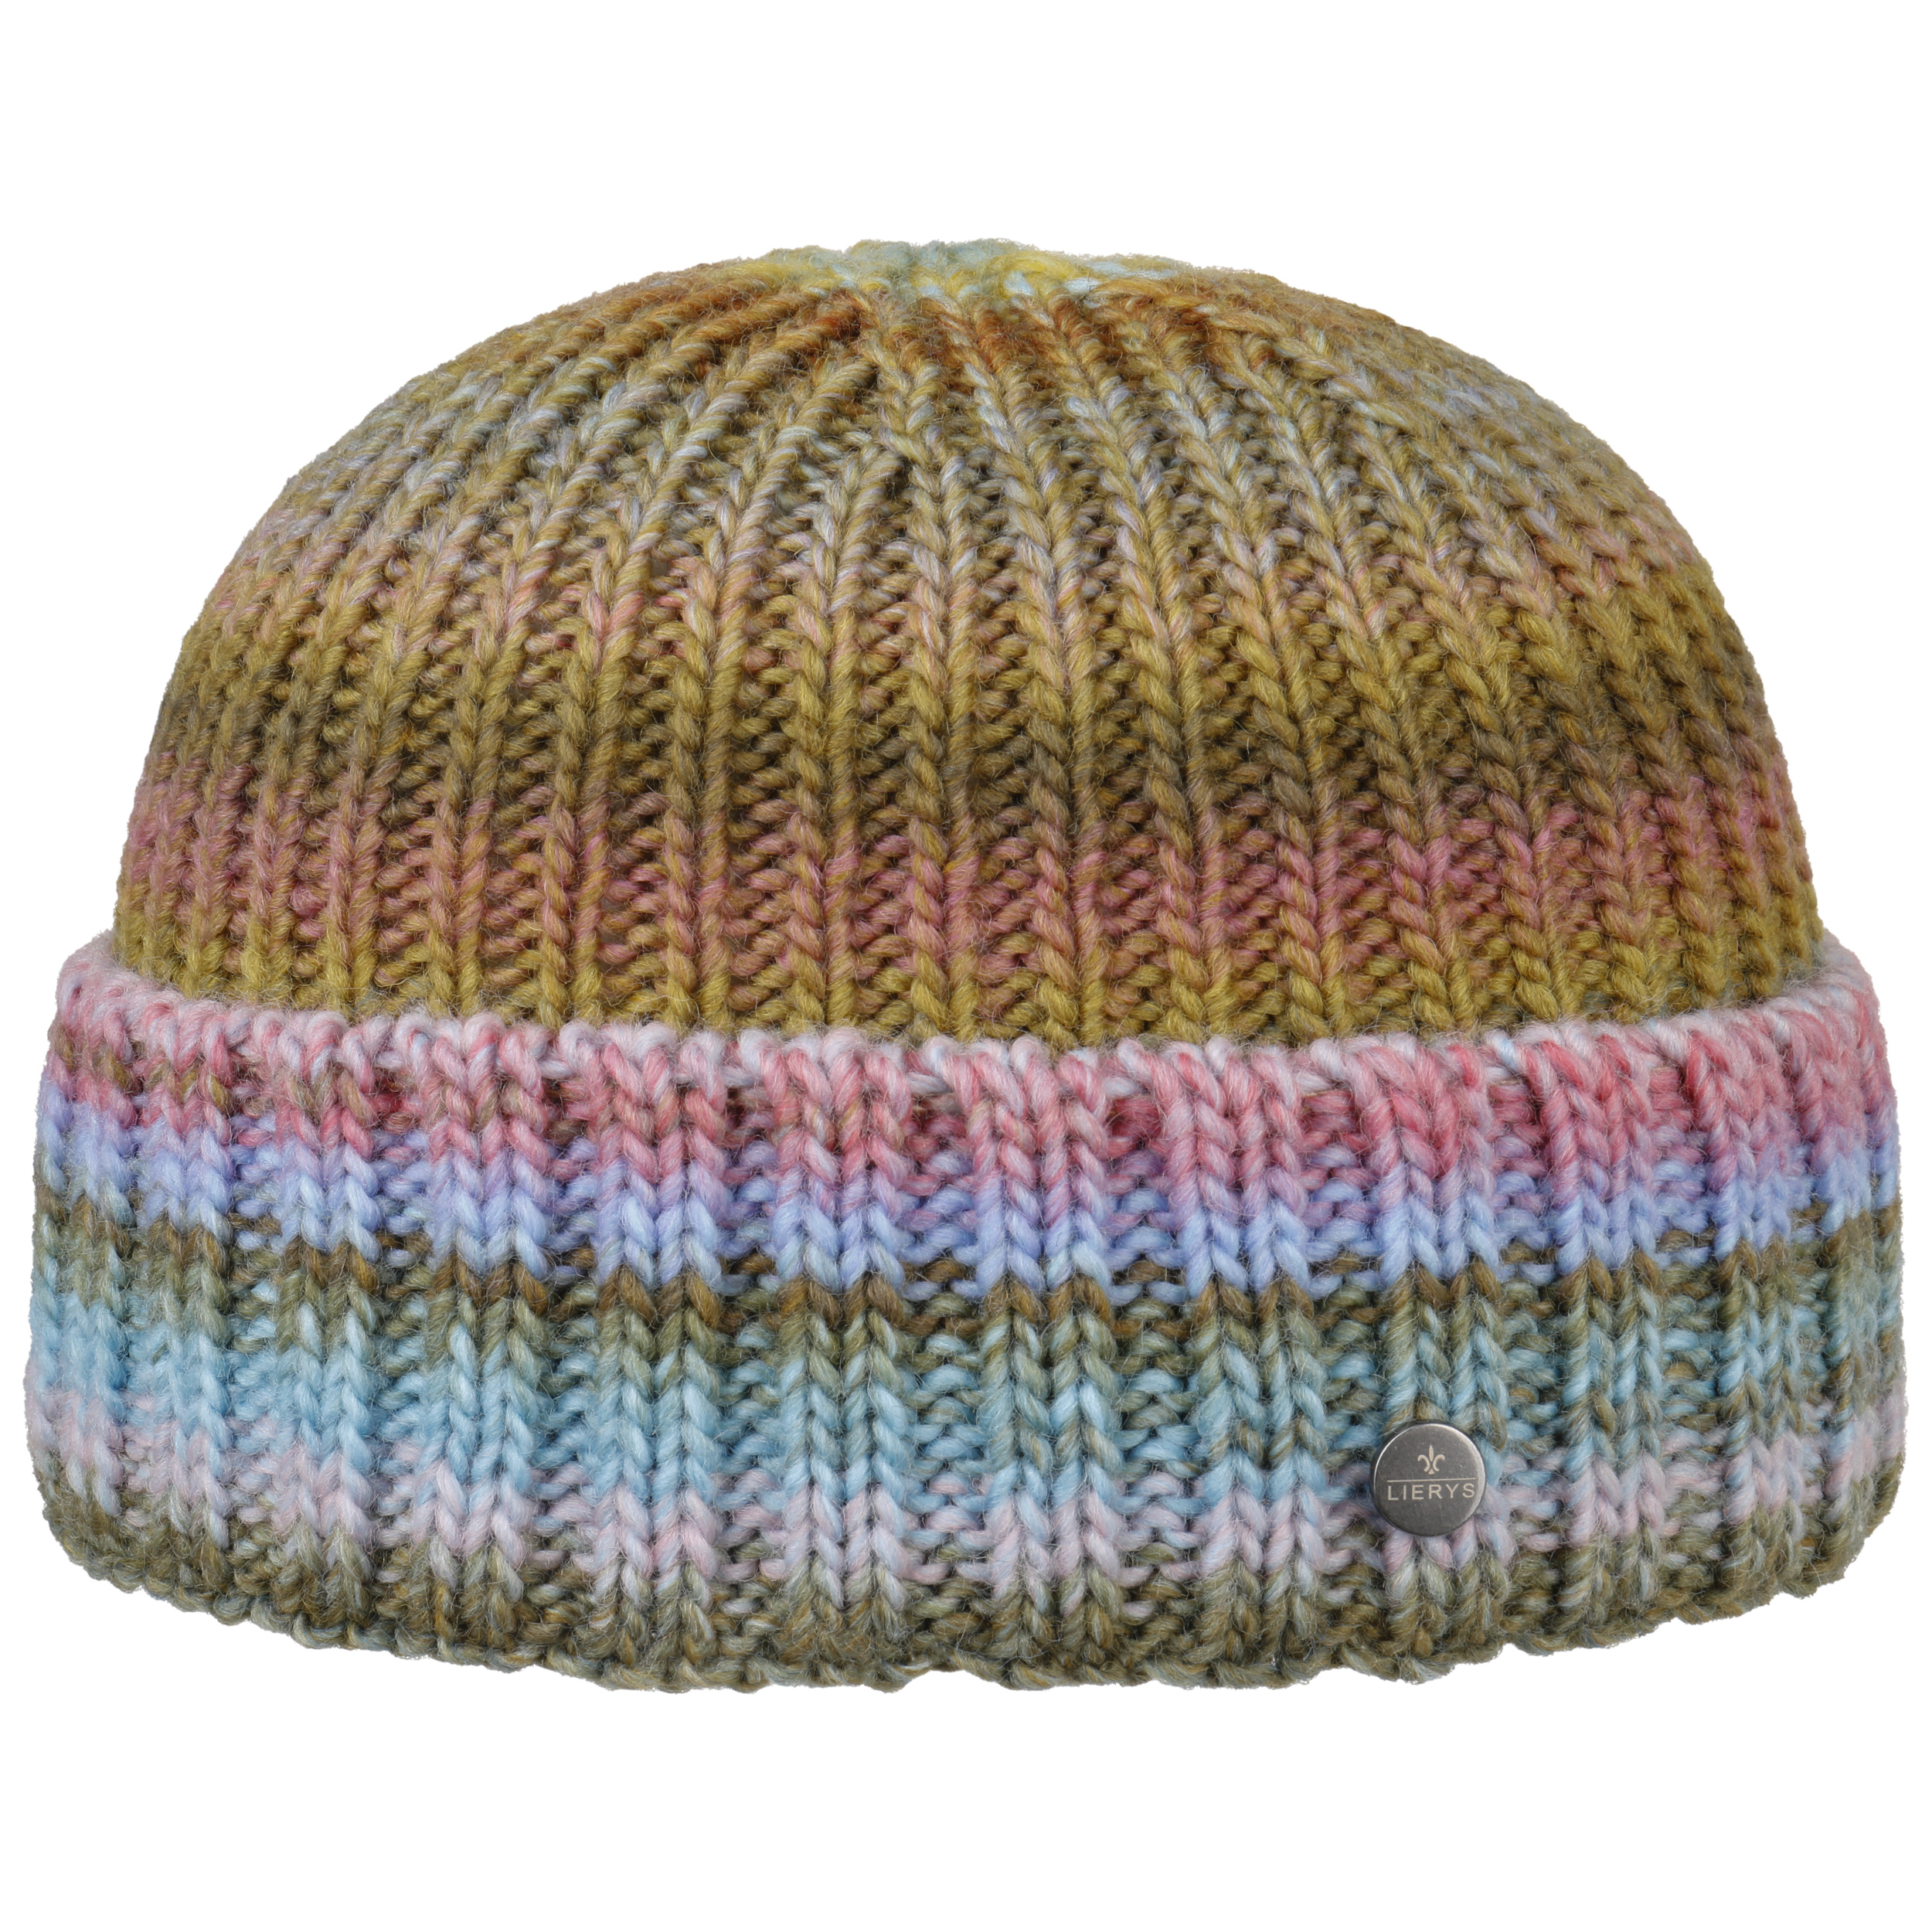 Balbana Beanie Hat with Cuff by Lierys - 32,95